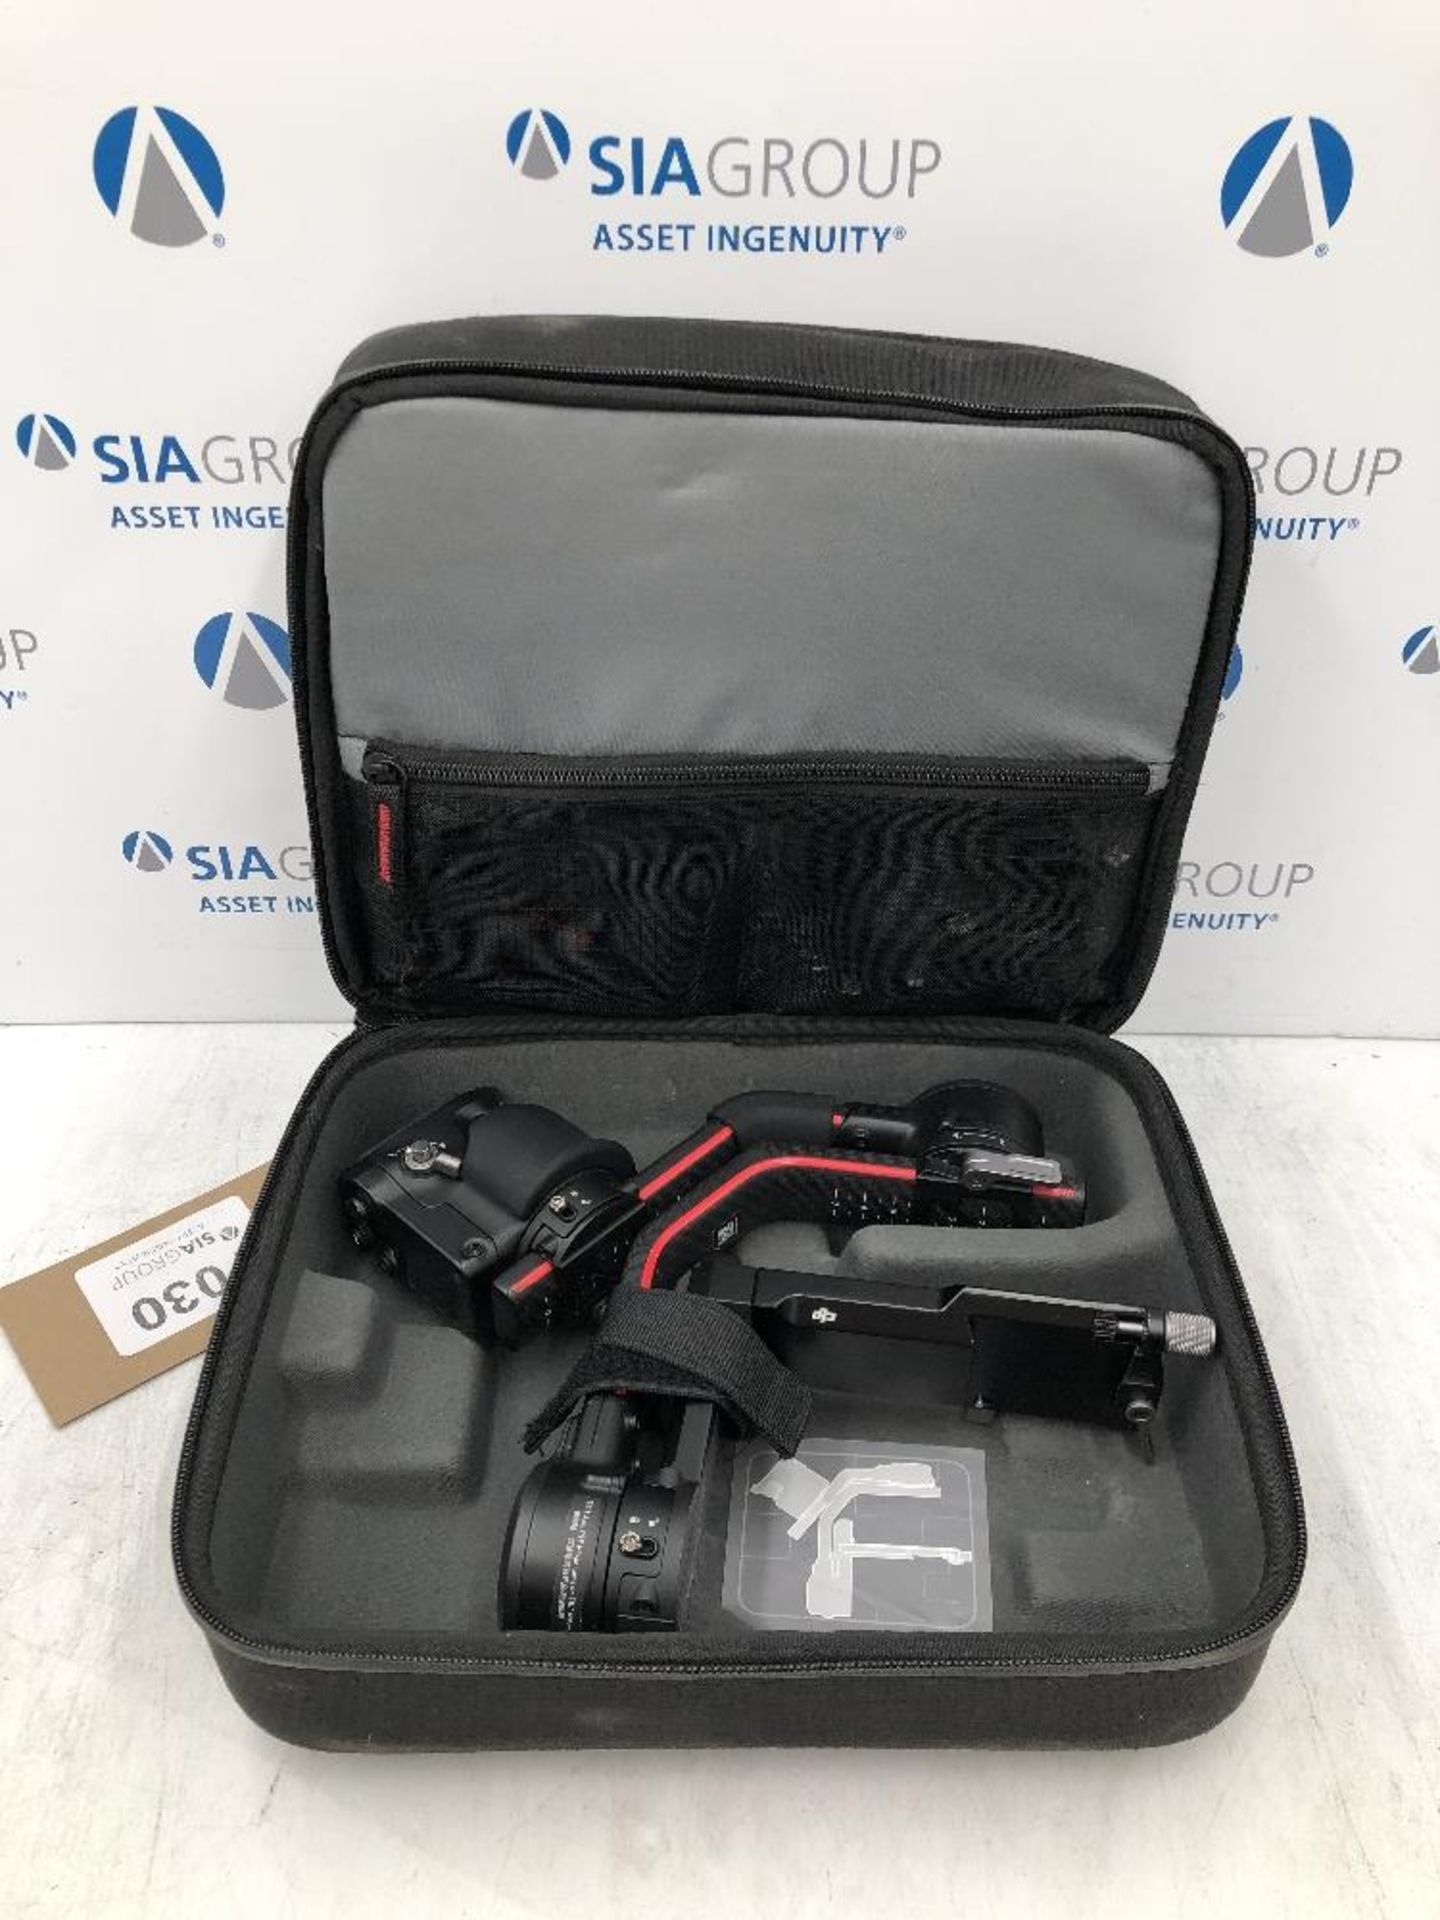 DJI RS 2 Gimbal 3-axis camera Stabiliser Kit for DSLR Cameras - Image 2 of 5